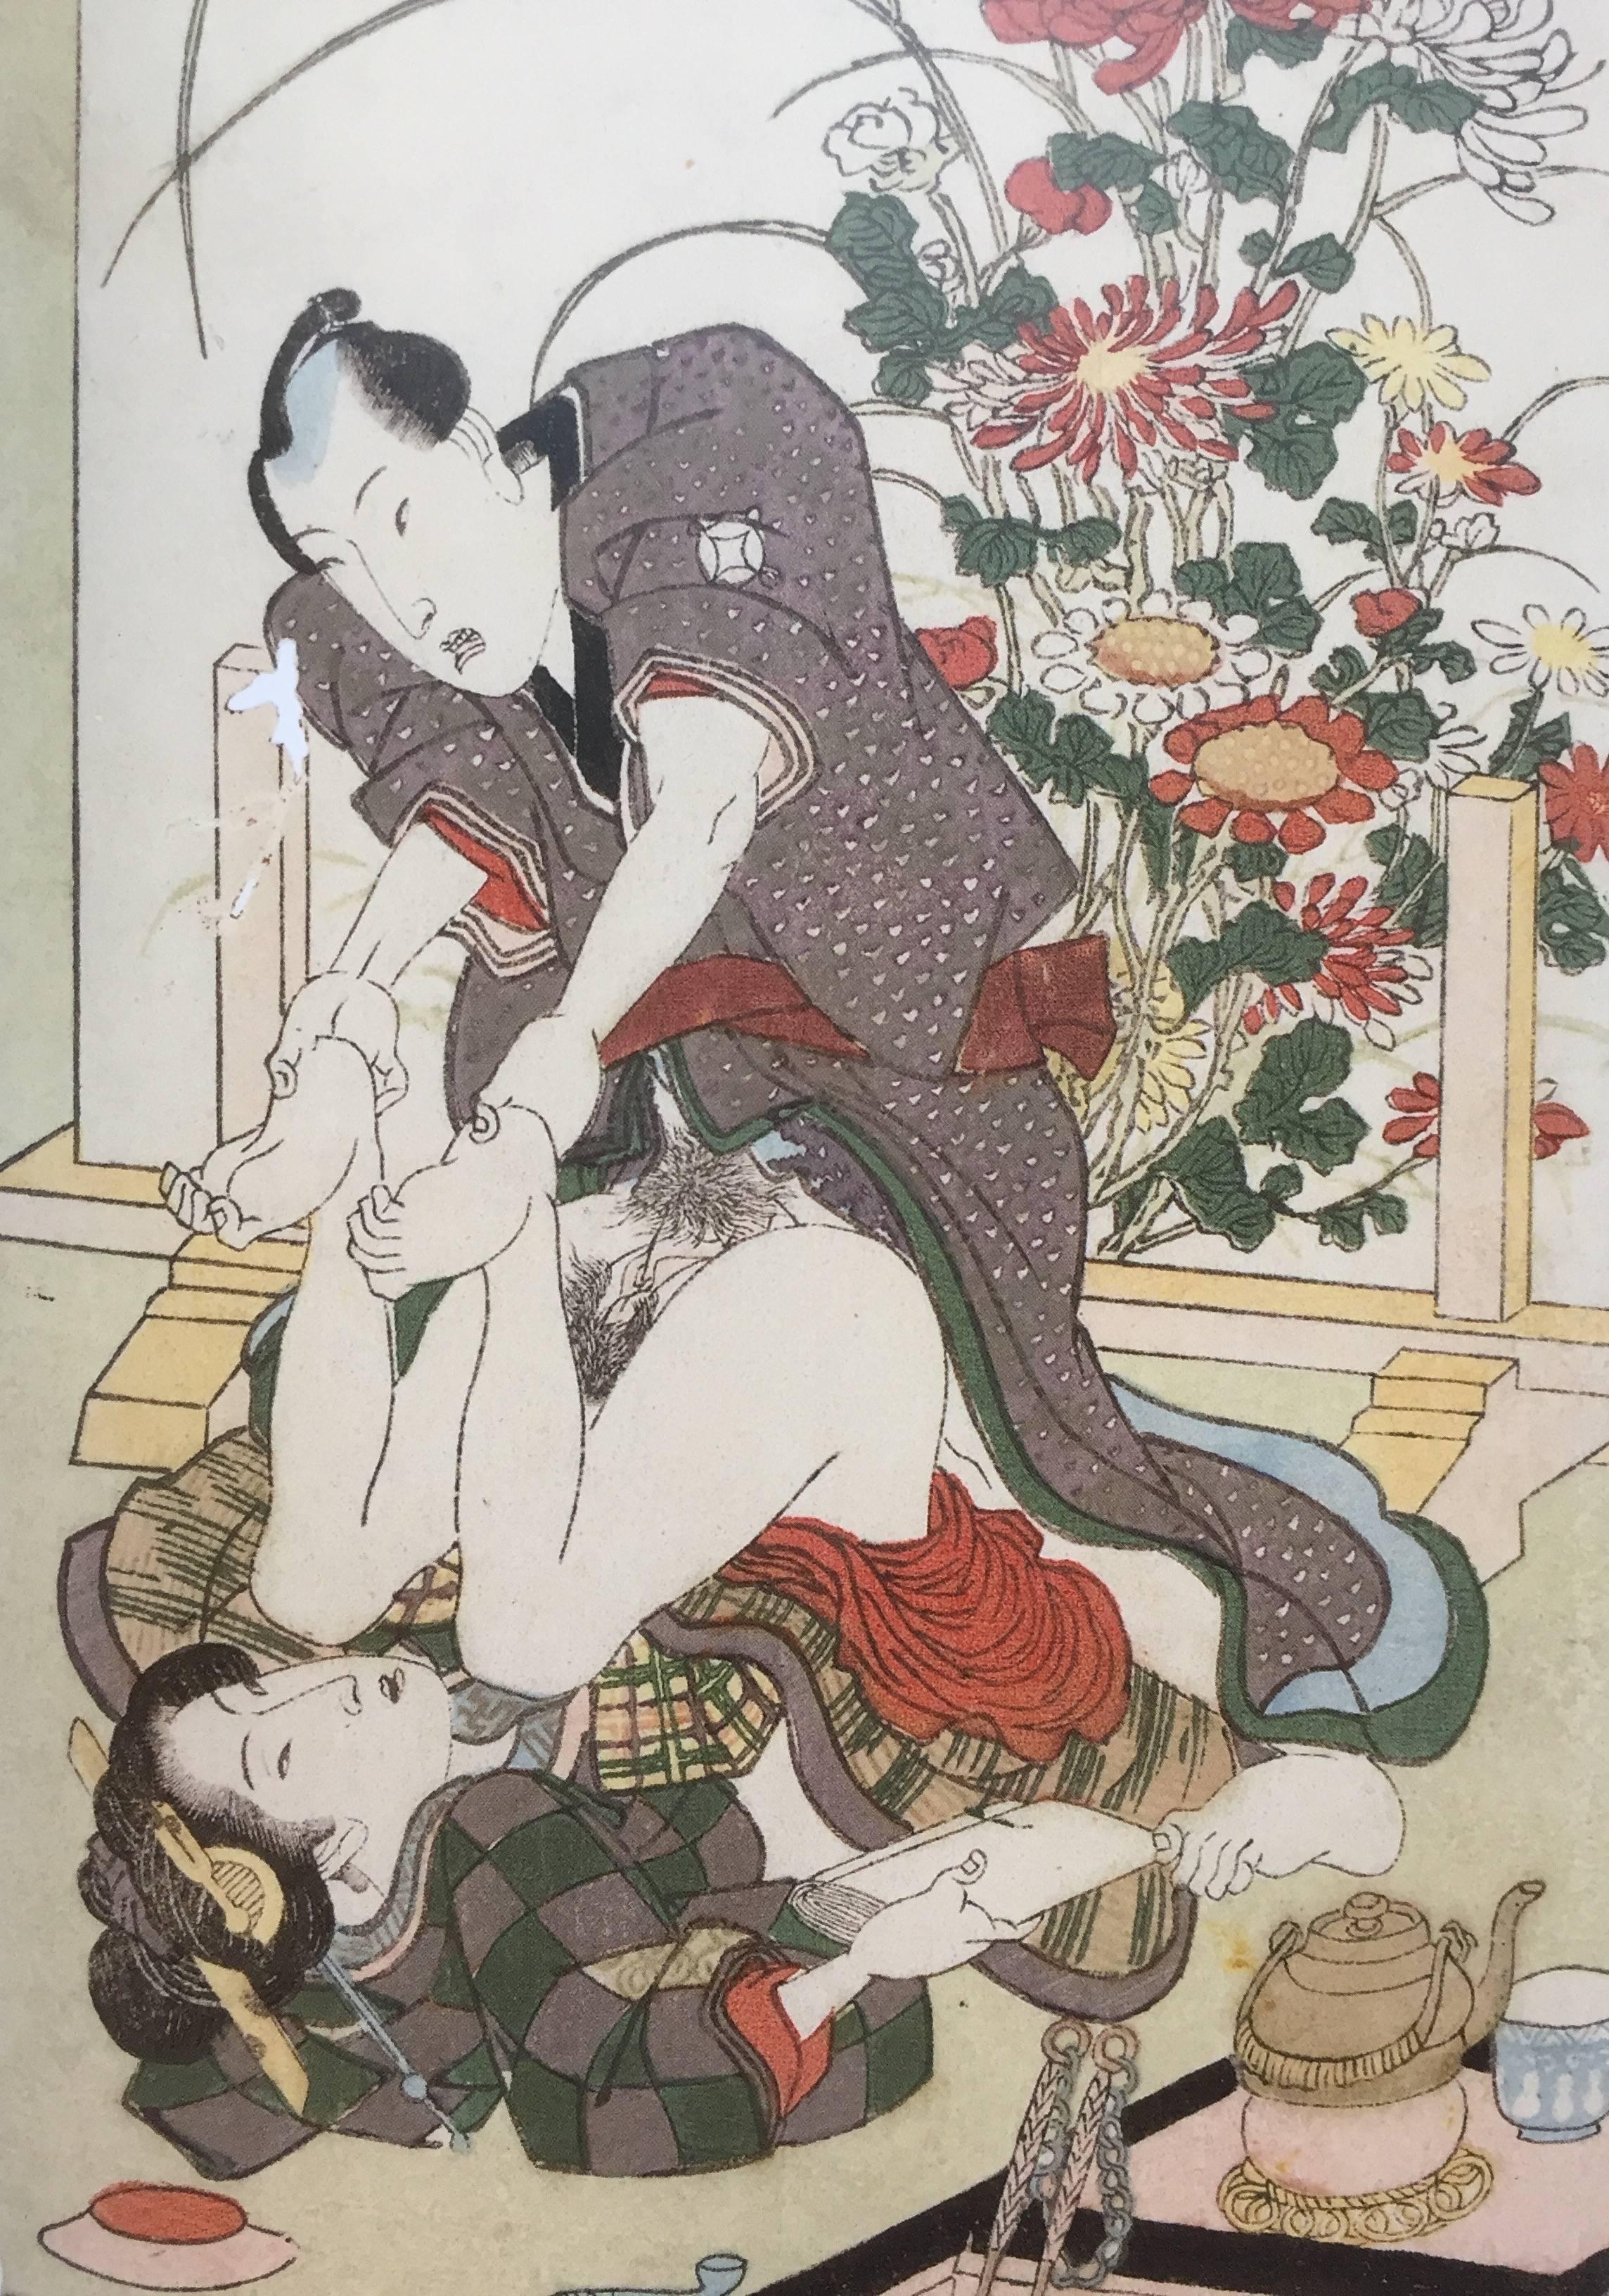 Paper Araki Meets Hokusai - Nobuyoshi Araki, Hokusai - 1st Edition, Kehrer, 2008